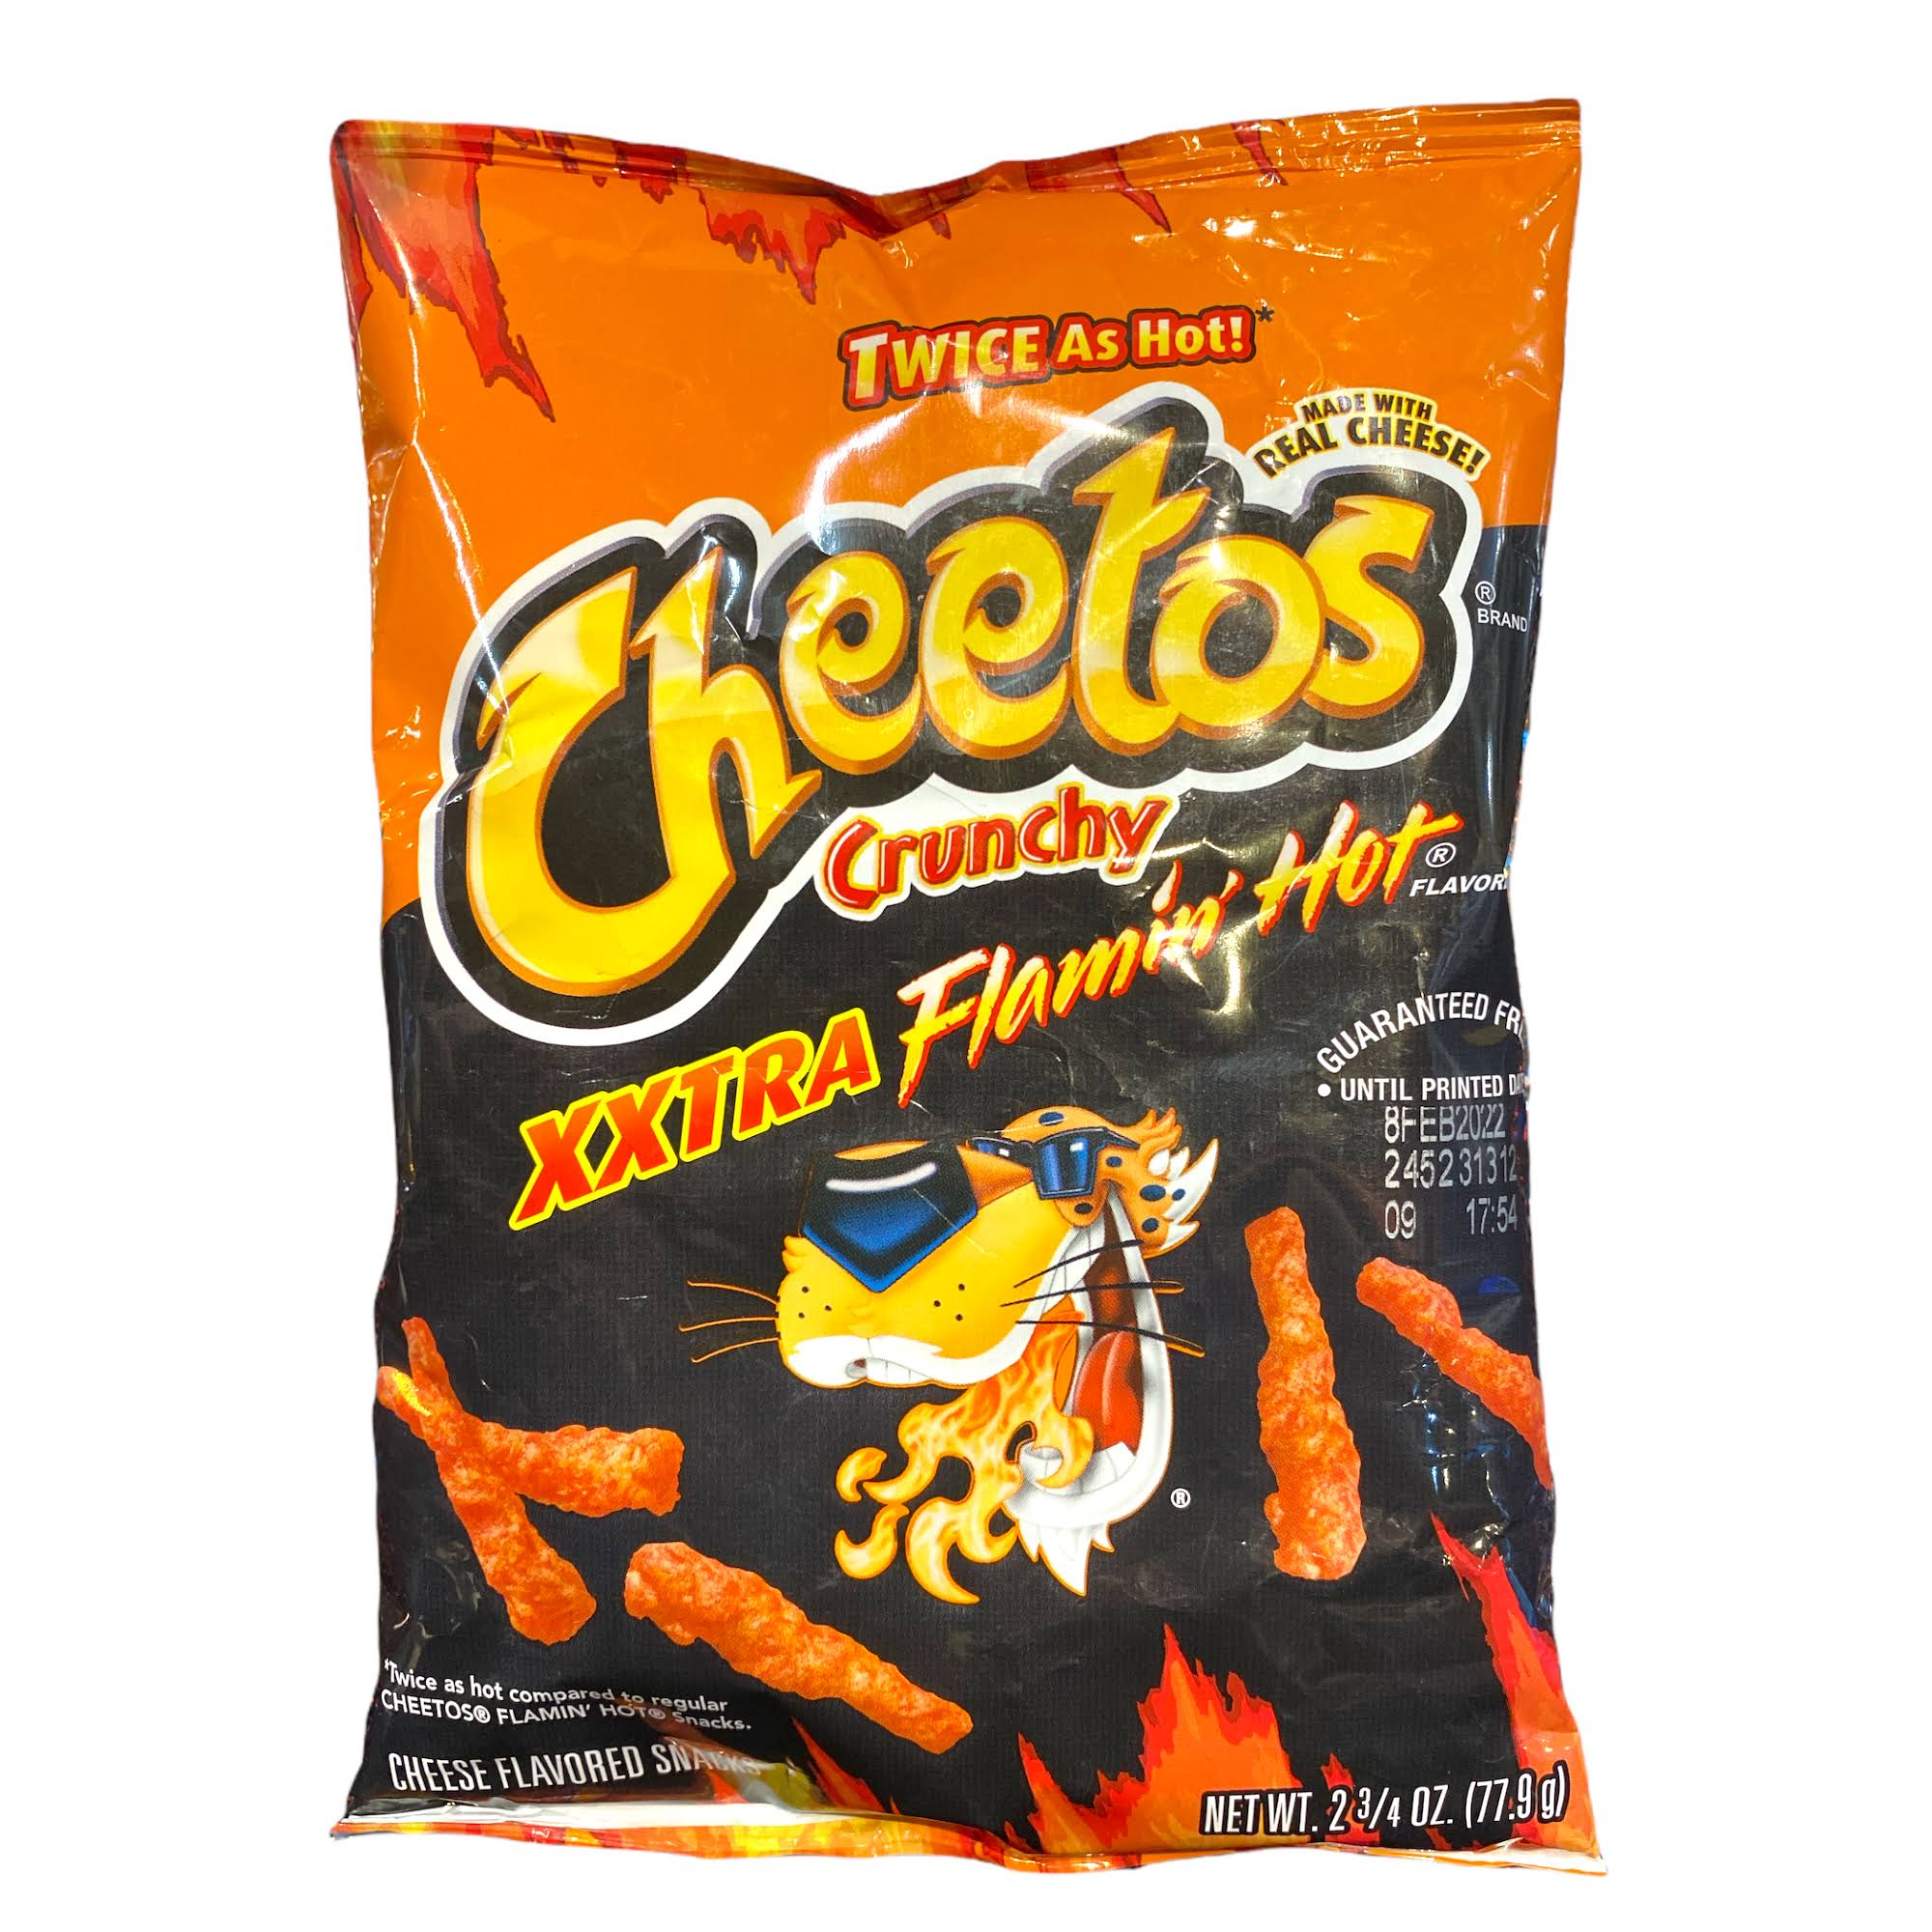 Cheetos Crunchy x Xtra Flamin Hot 2, Wholesale, Bulk